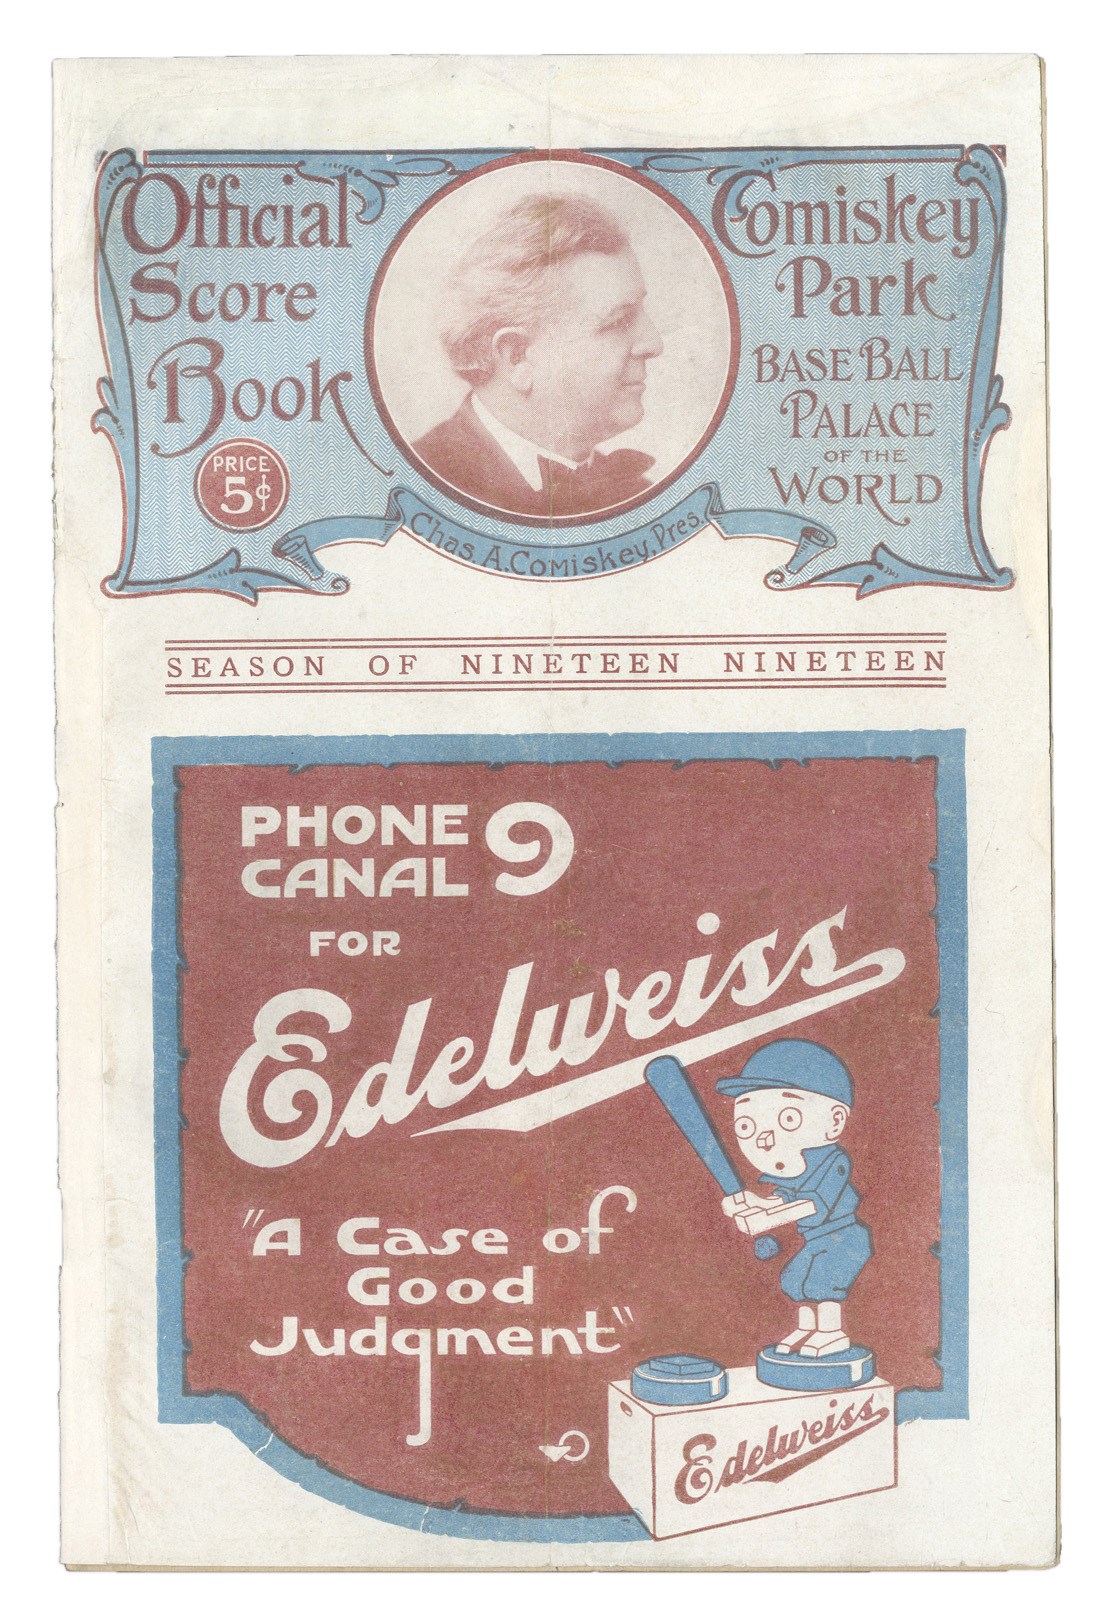 1919 Black Sox World Series Program at Chicago